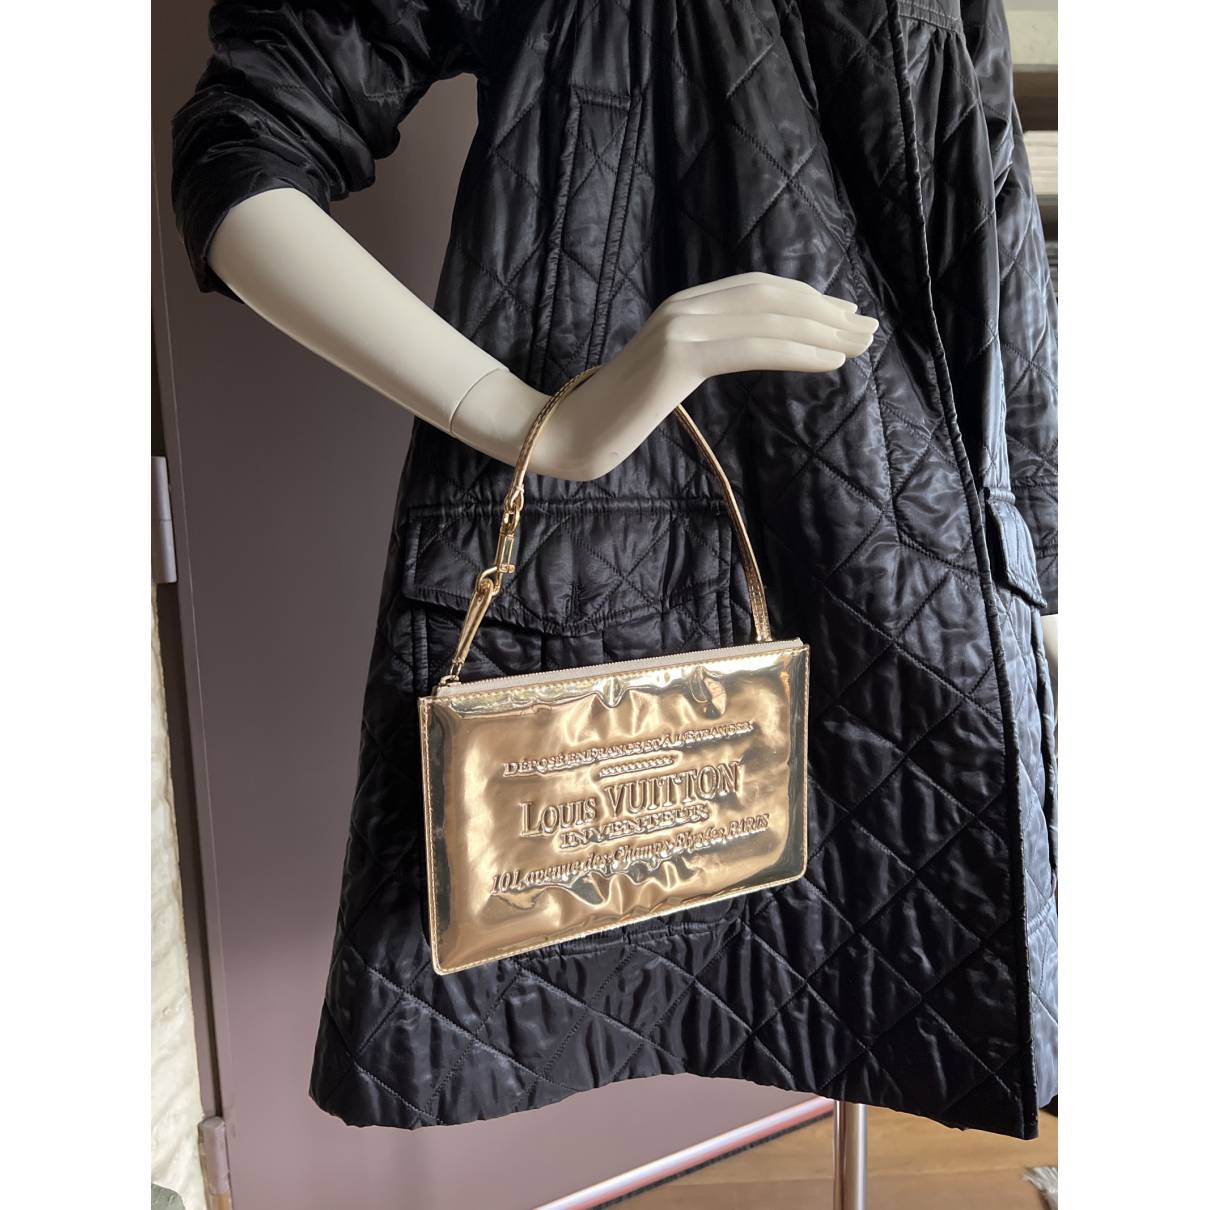 Louis Vuitton - Authenticated Handbag - Patent Leather Gold Plain for Women, Very Good Condition